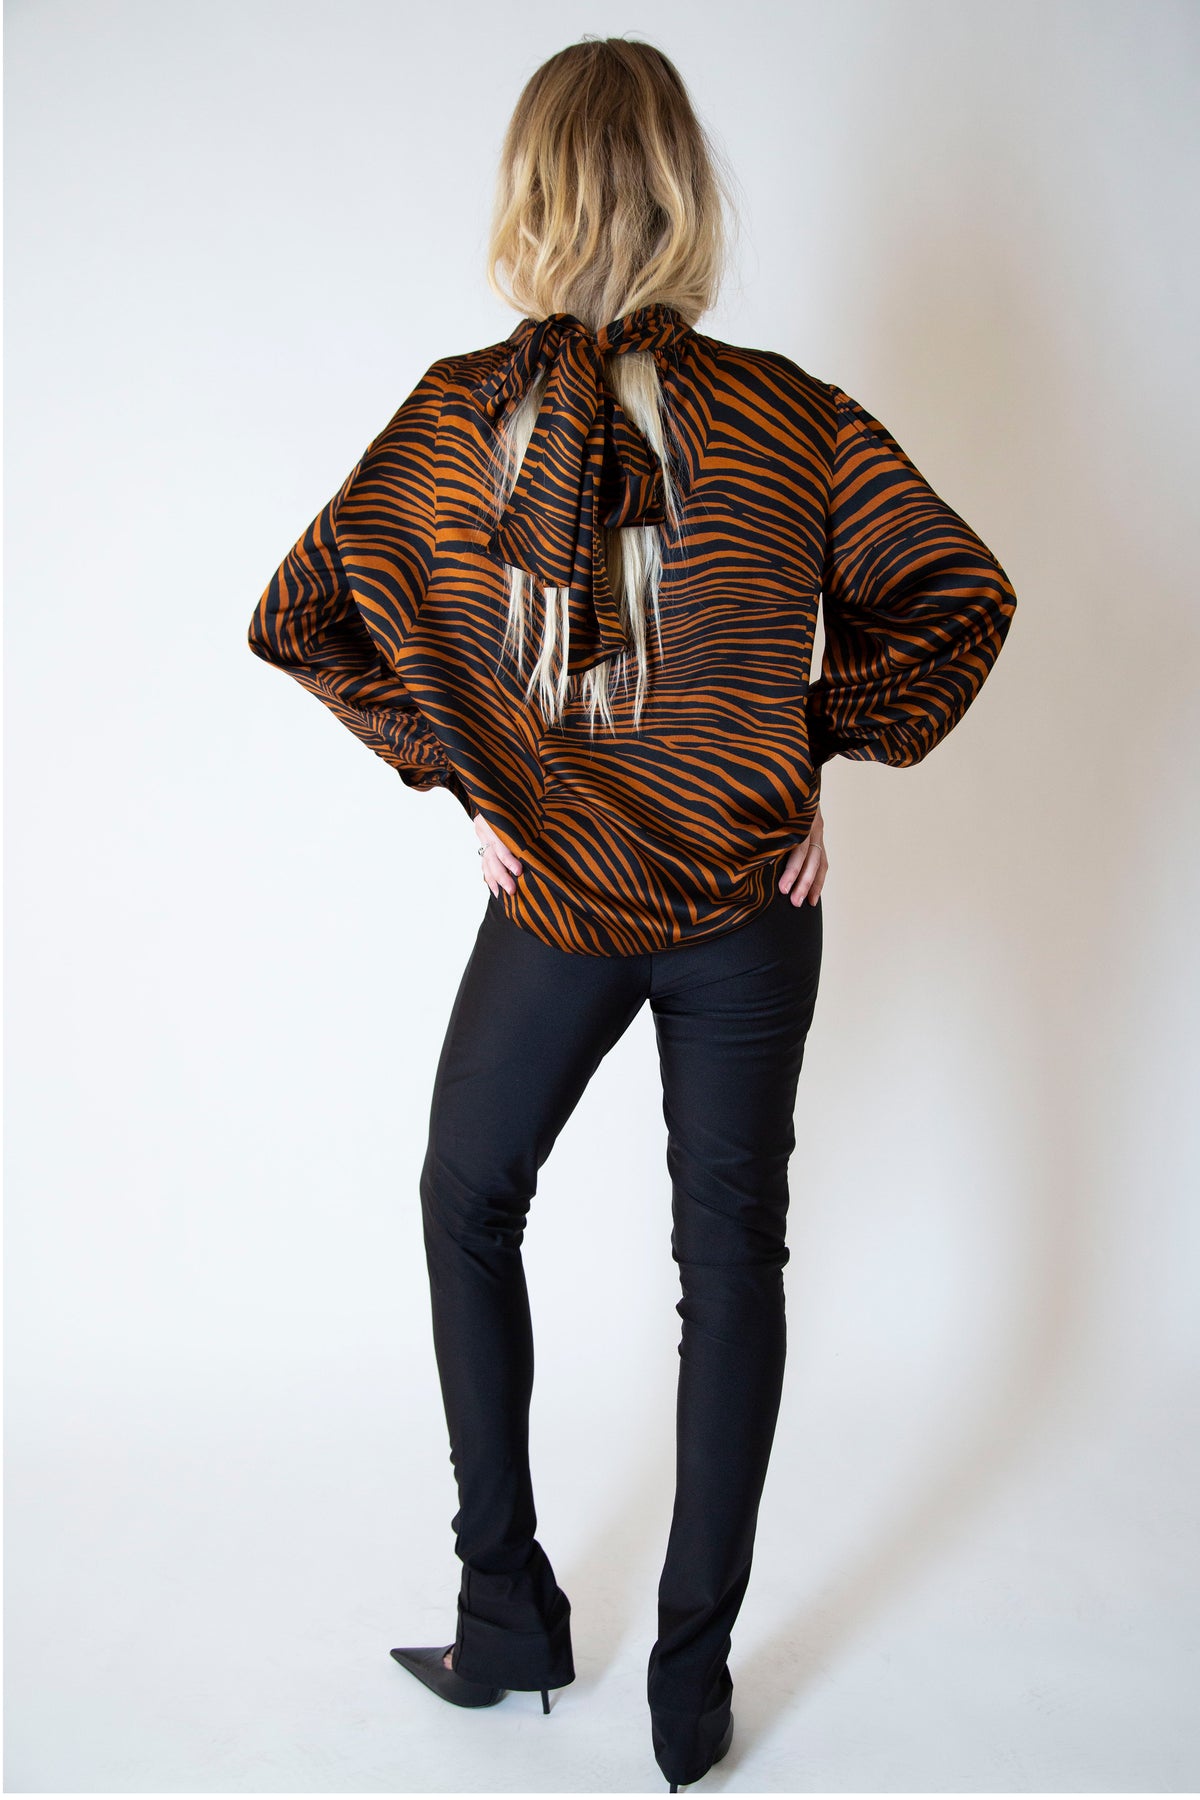 Yves Saint Laurent animal printed shirt